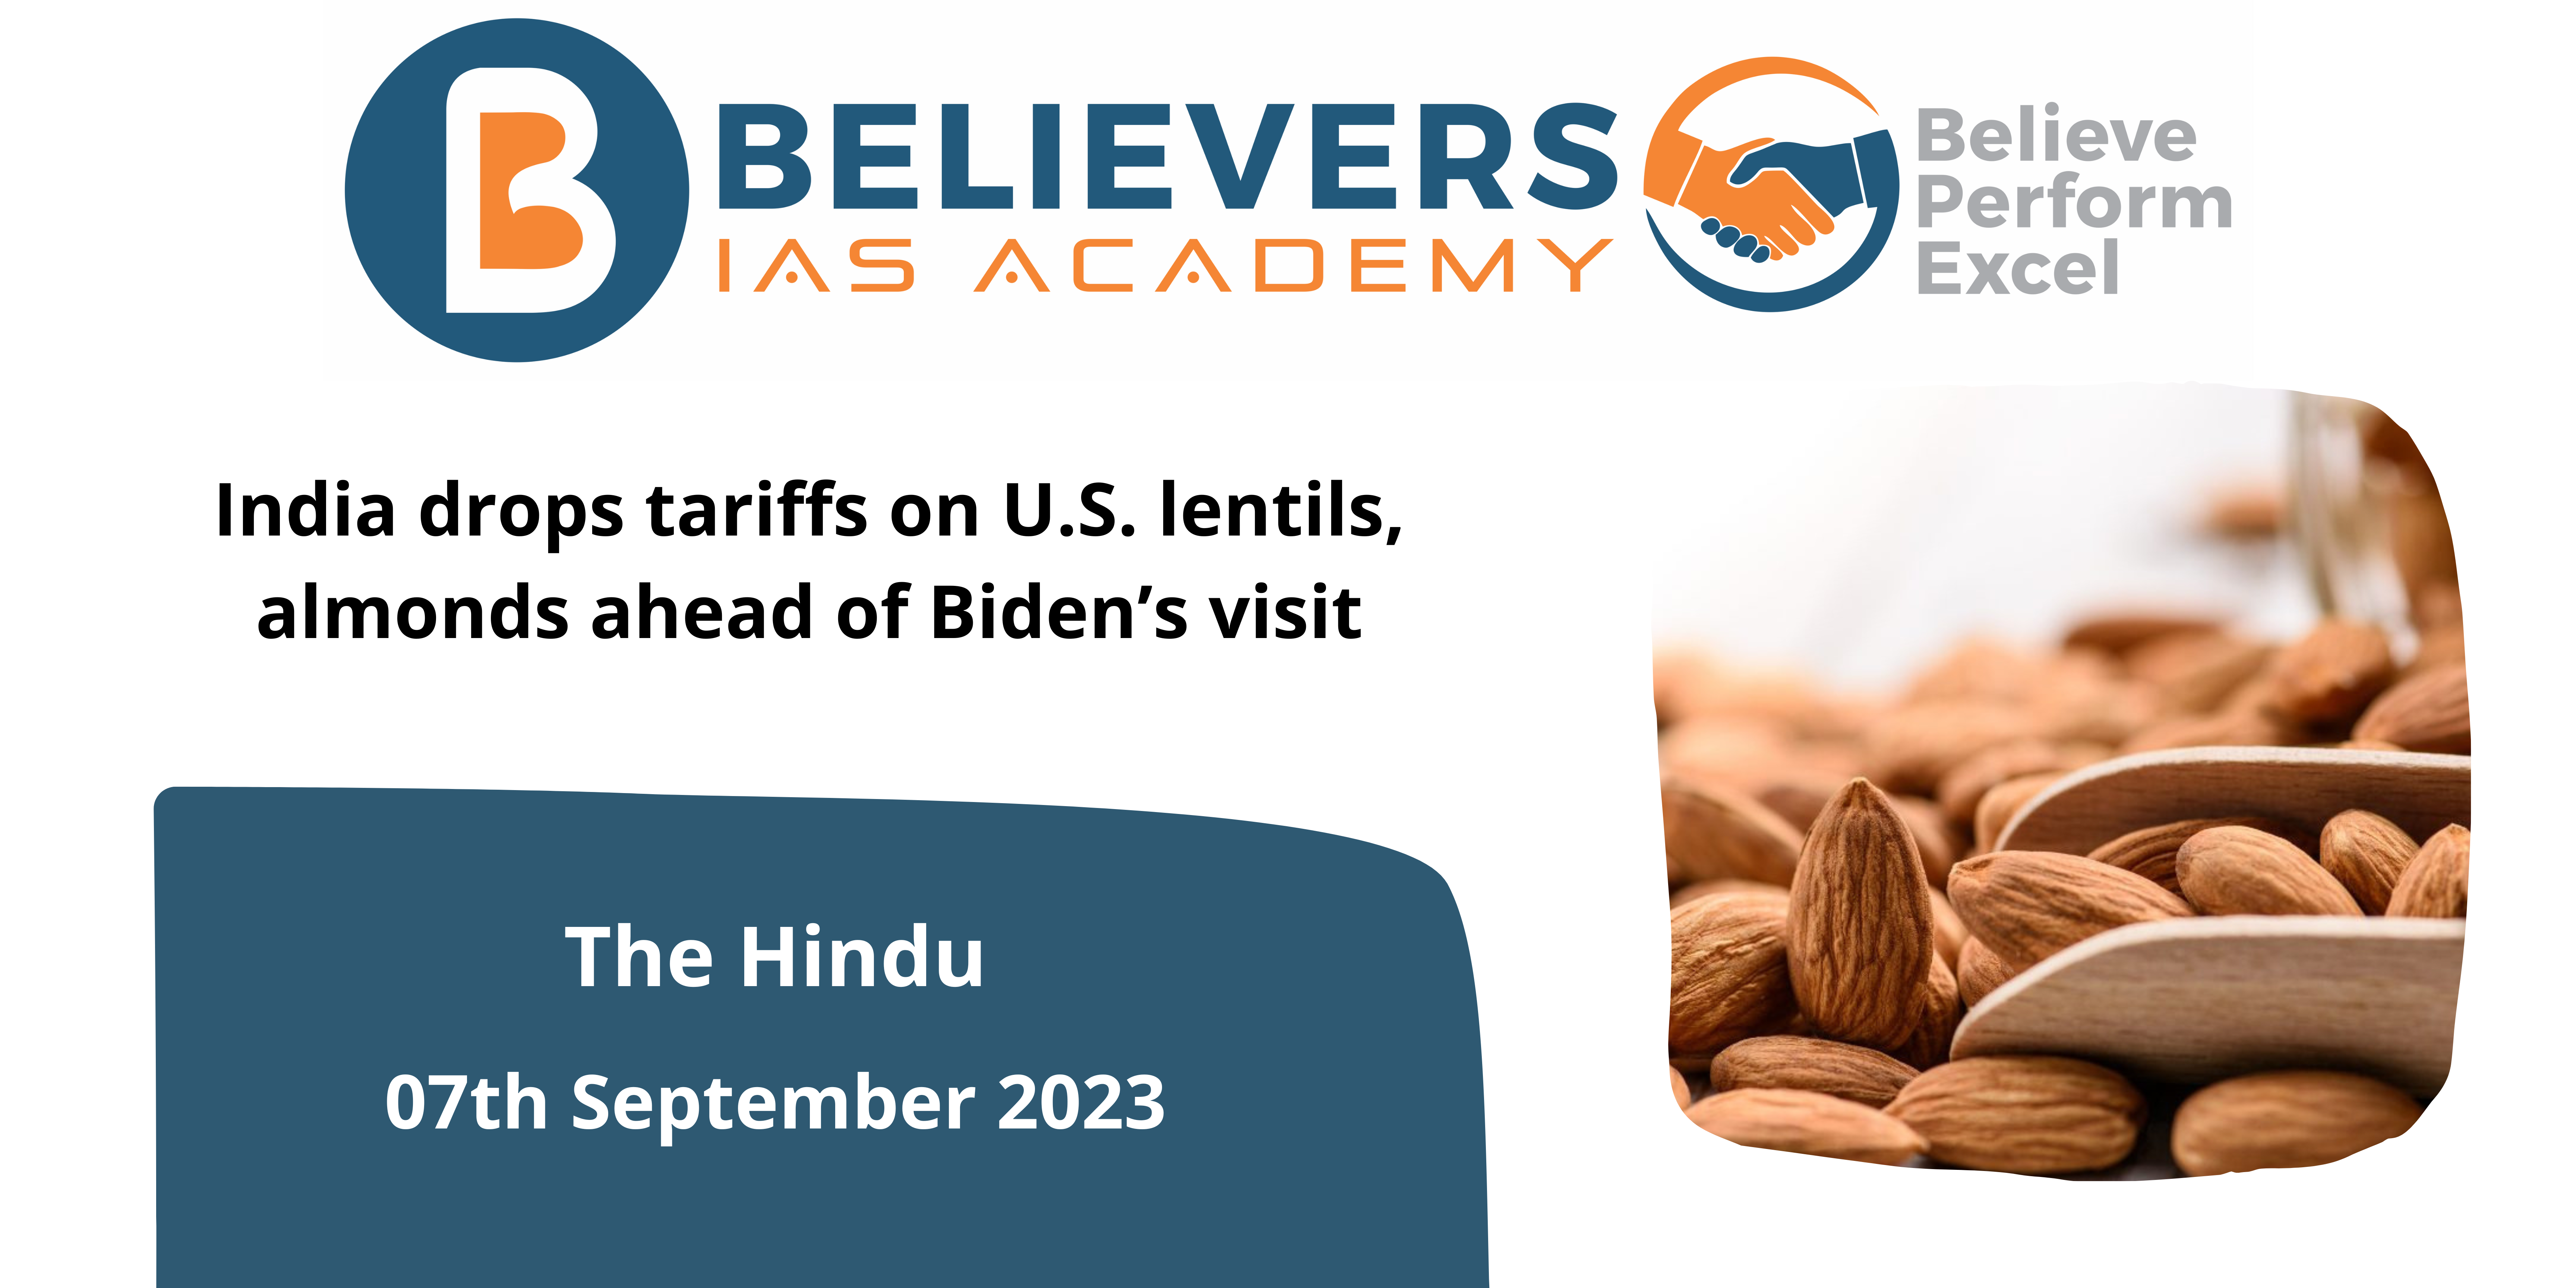 India drops tariffs on U.S. lentils, almonds ahead of Biden’s visit